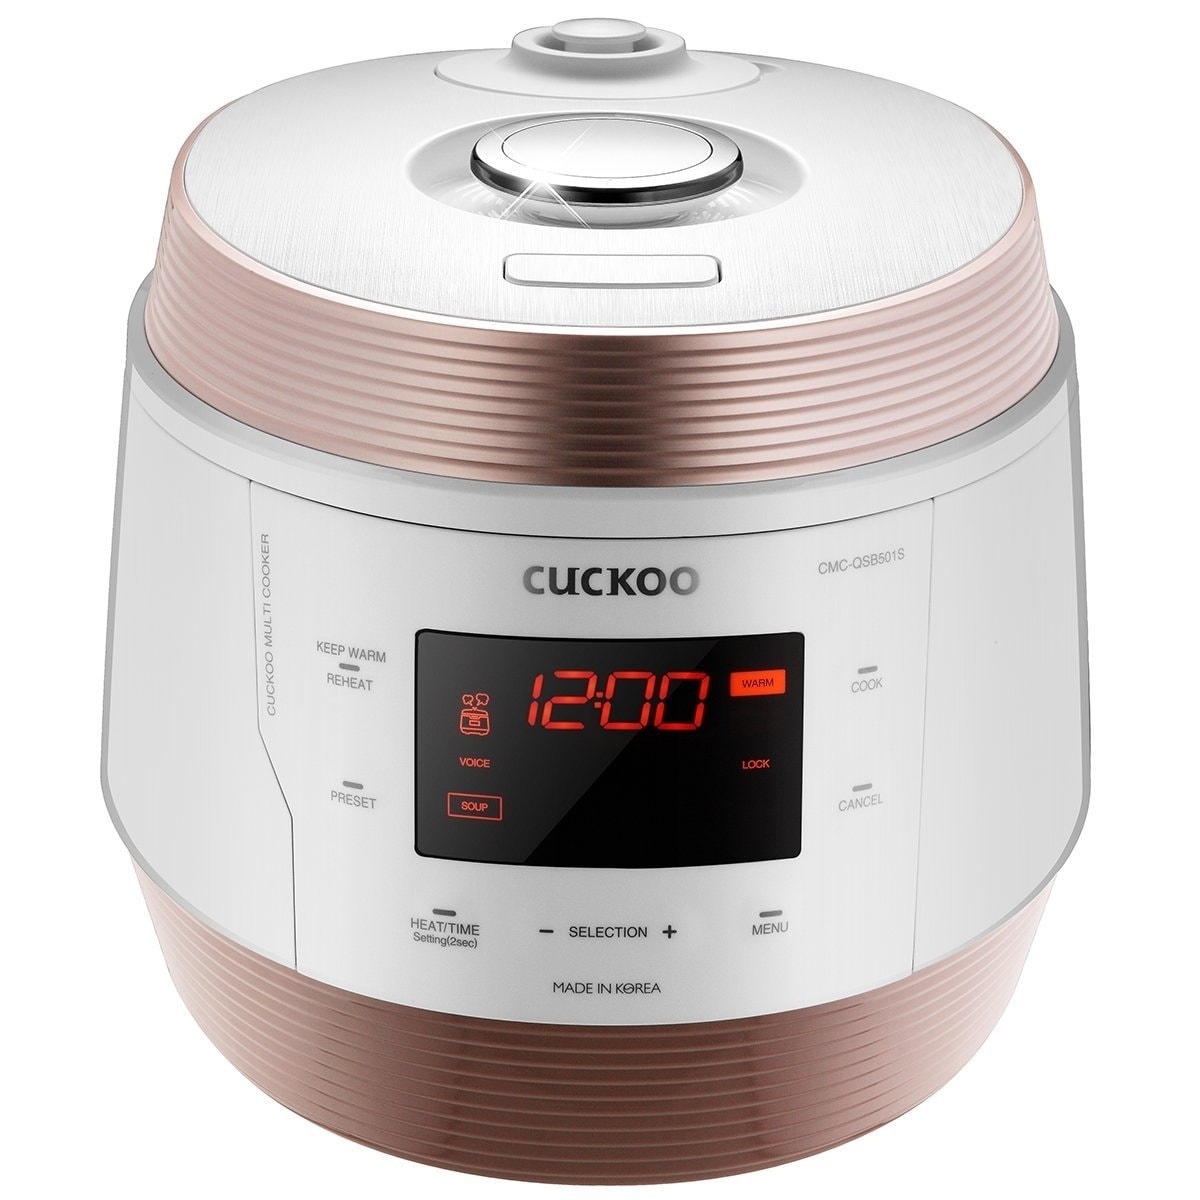 https://ak1.ostkcdn.com/images/products/18767895/Cuckoo-8-in-1-Multi-Pressure-cooker.-Made-in-Korea-White-CMC-QSB501S-b576e2d6-468d-492d-bfa6-cef10d9f3984.jpg